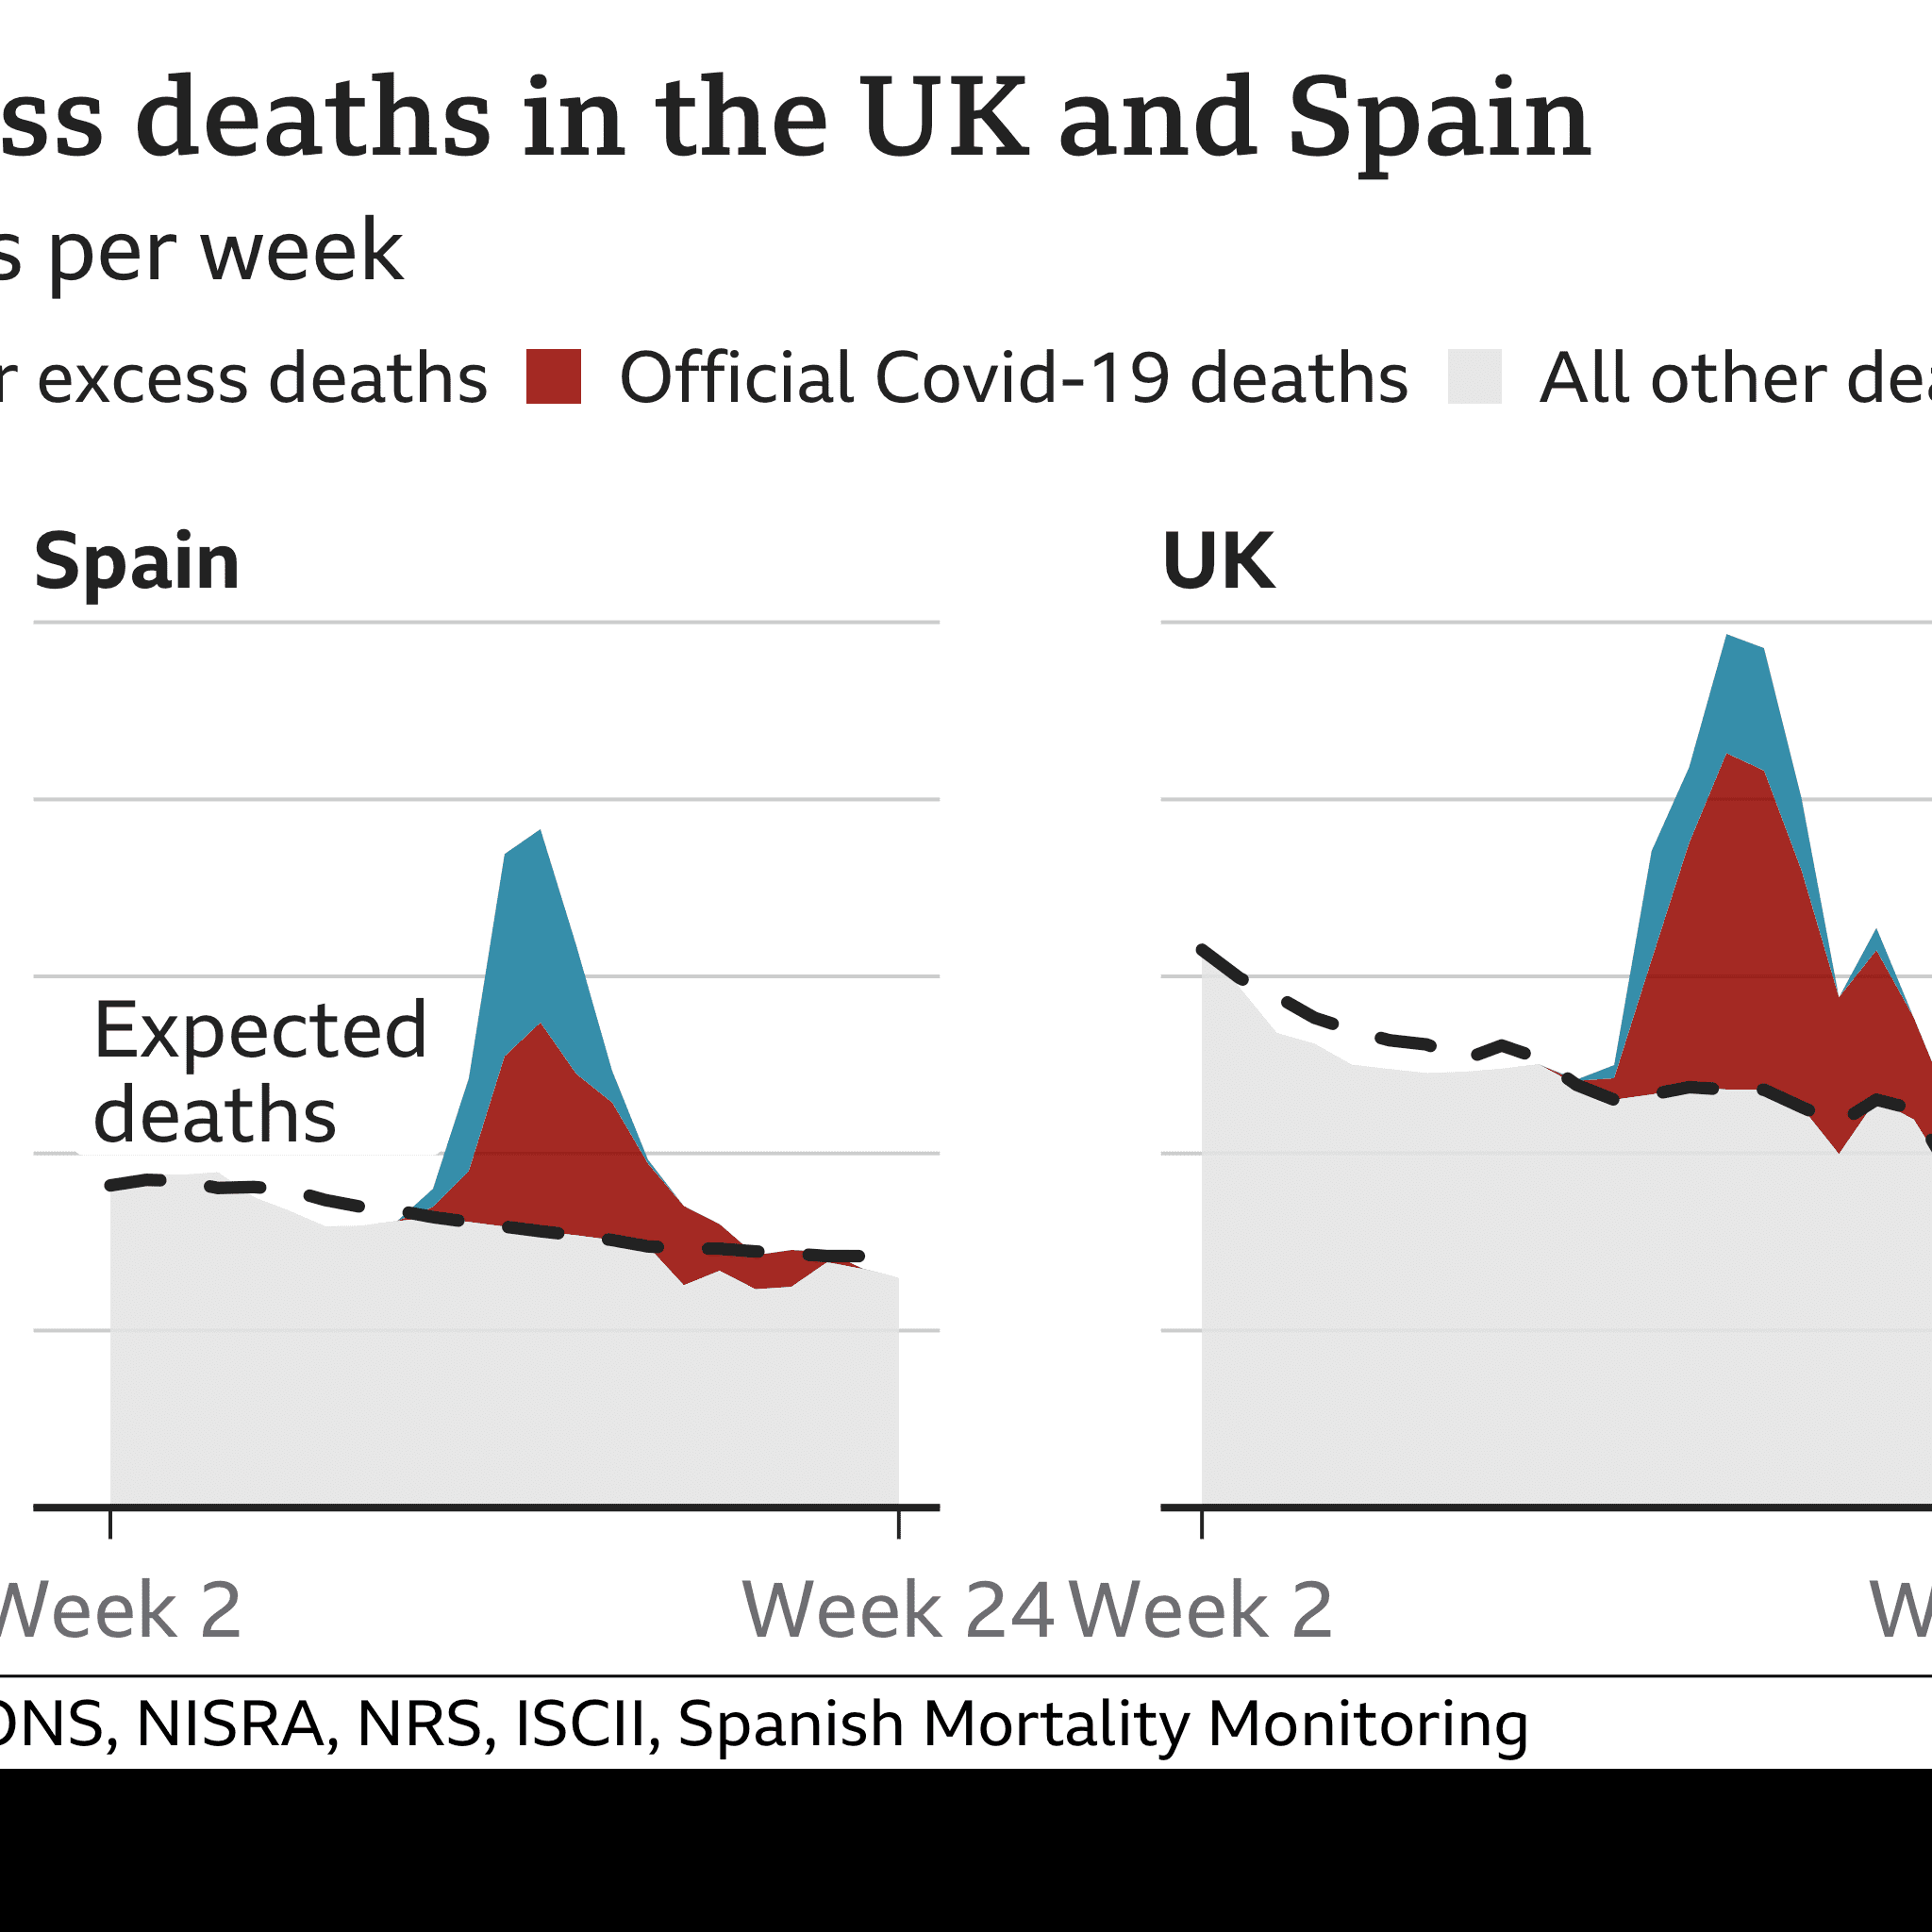 noncoronavirus_uk_spain_excess_deaths_2020_bbc.png